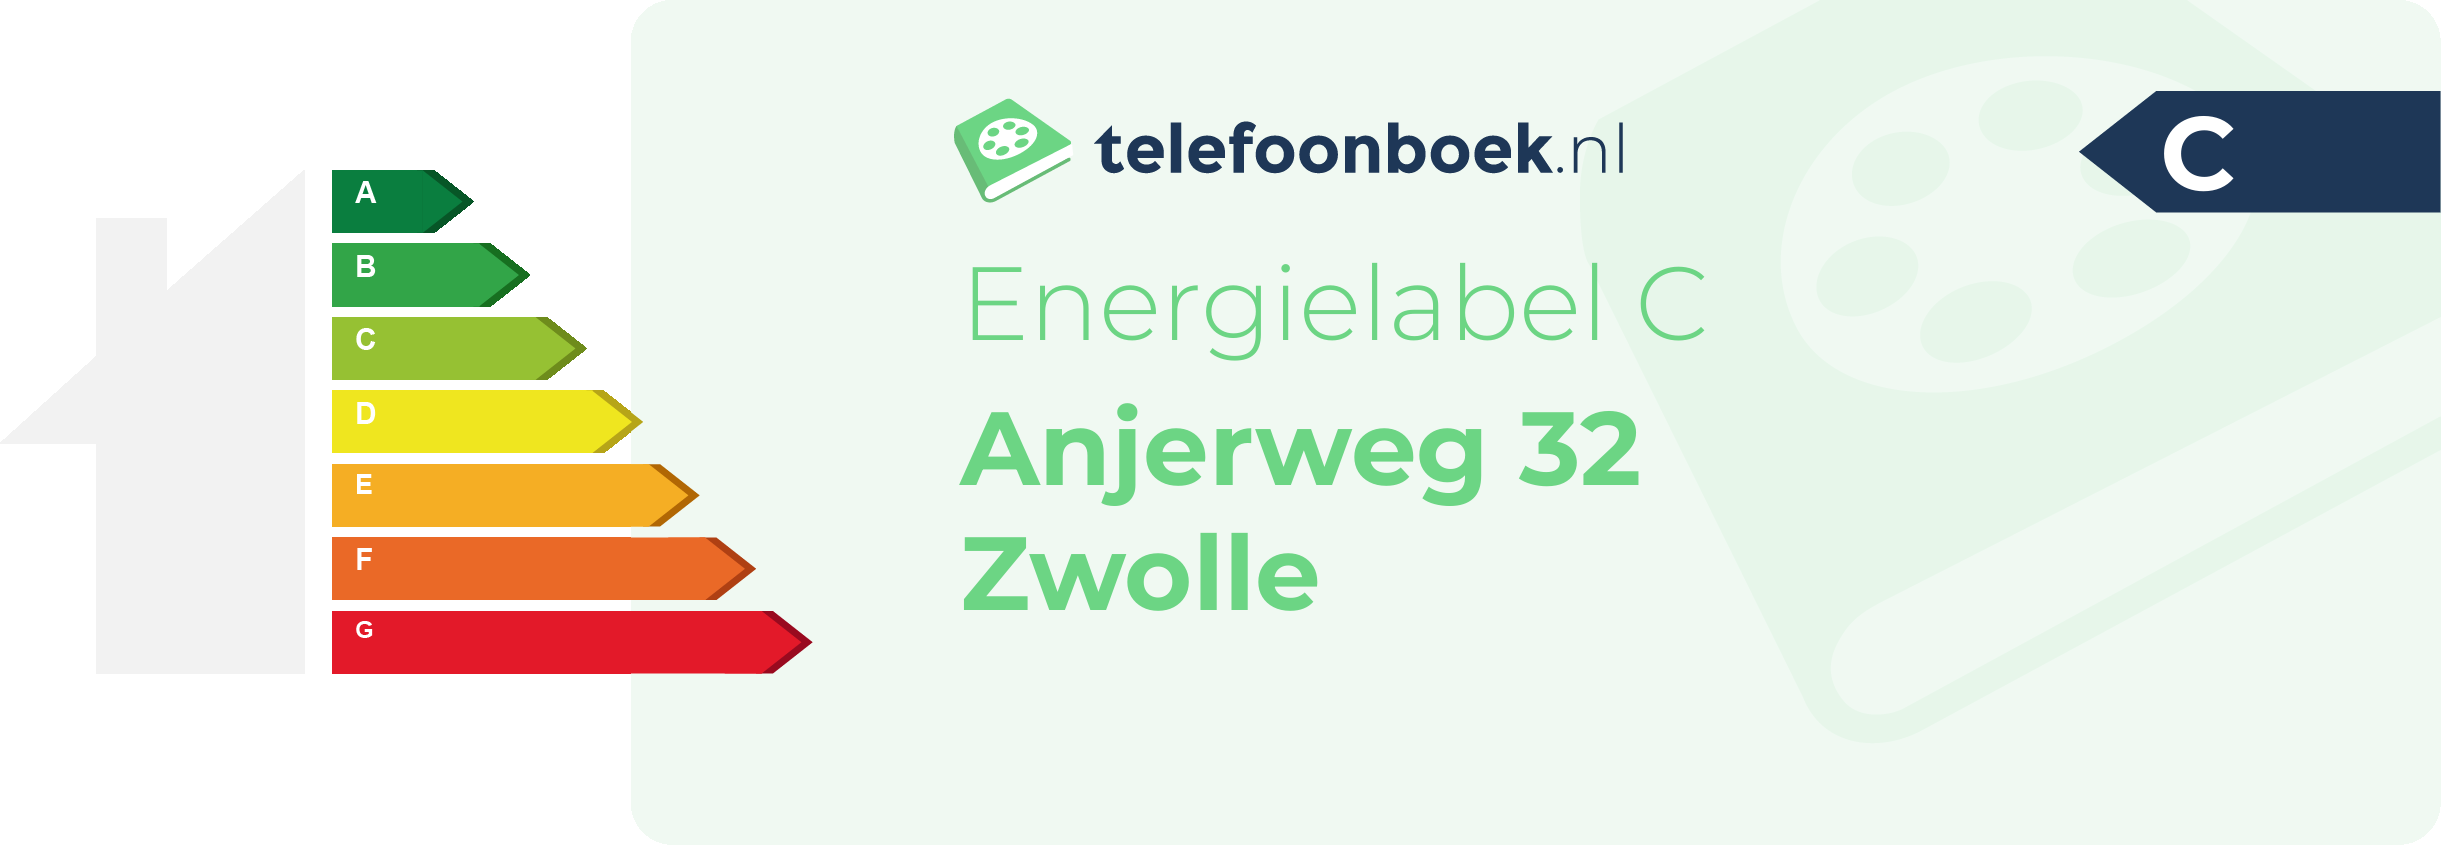 Energielabel Anjerweg 32 Zwolle